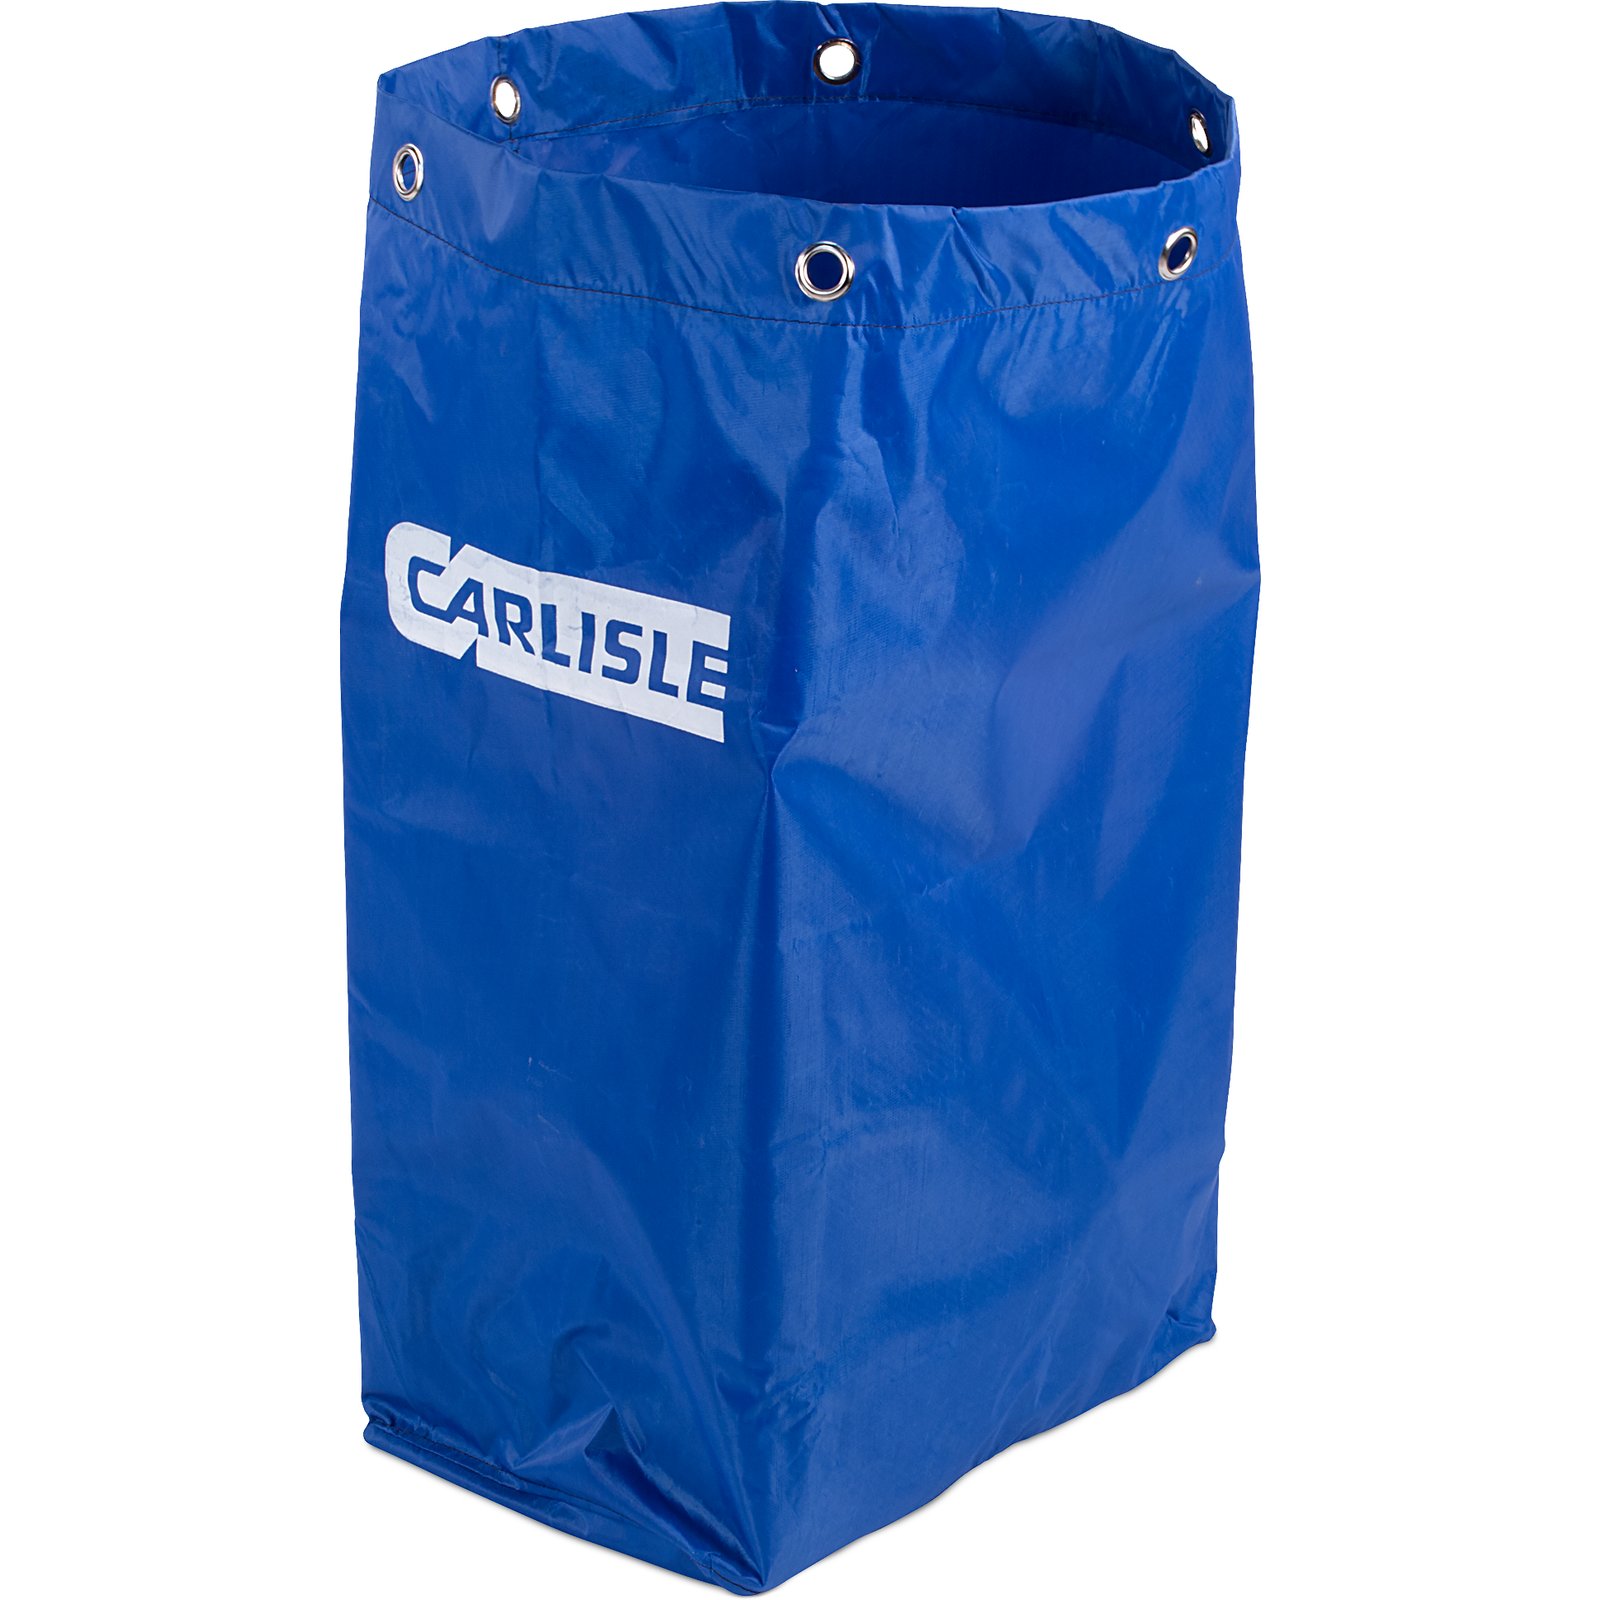 Carlisle Replacement Vinyl Bag 
f/ Janitors Cart, 25 Gallon, 
Blue